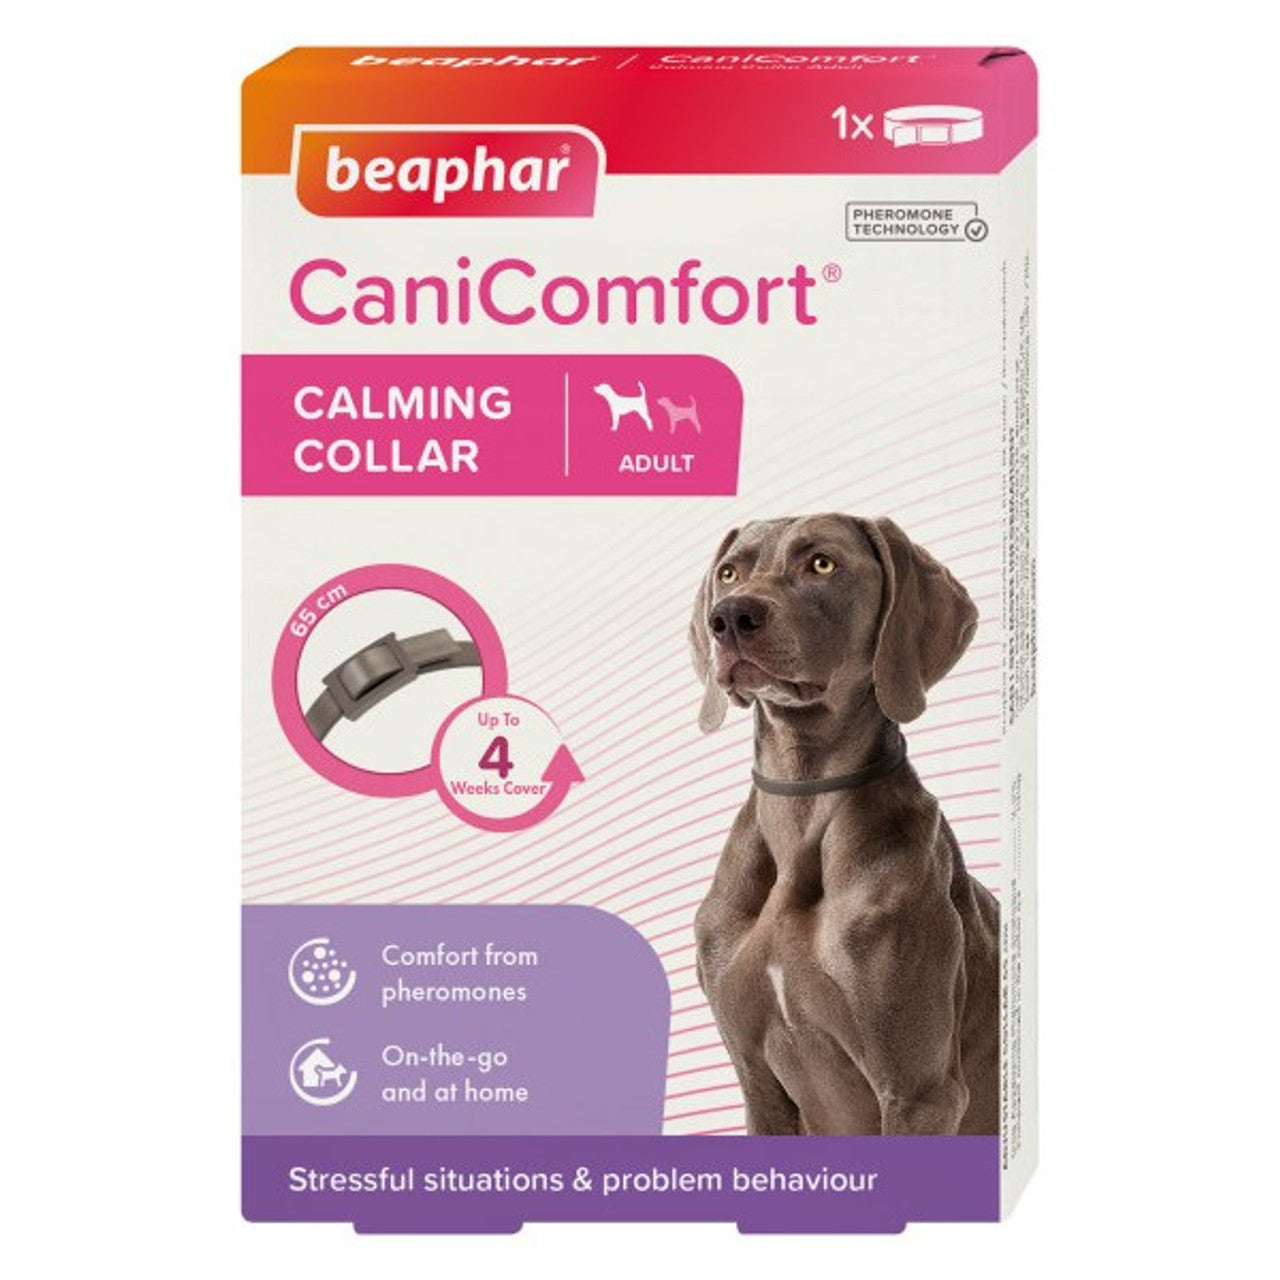 Beaphar CaniComfort Calming Collar - Adult